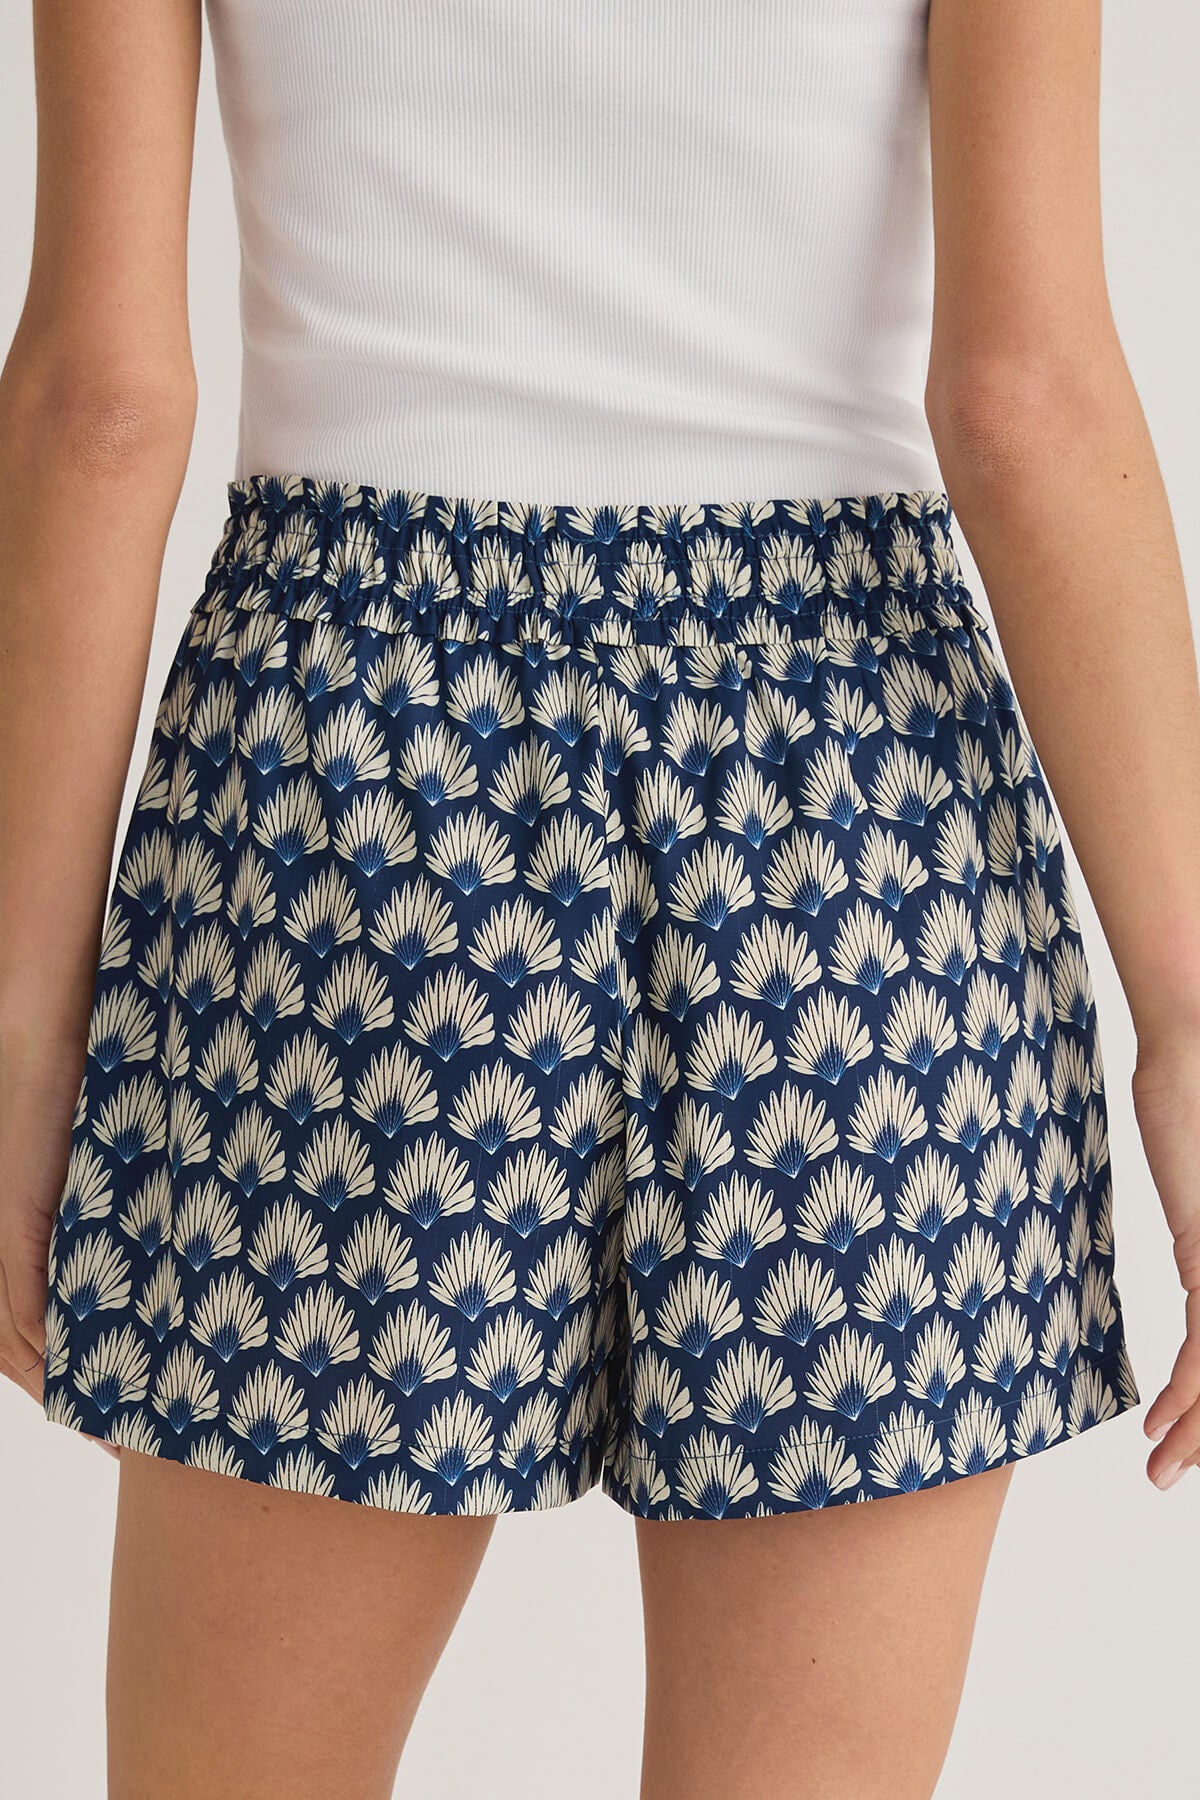 Eesome Geometric Print Shorts